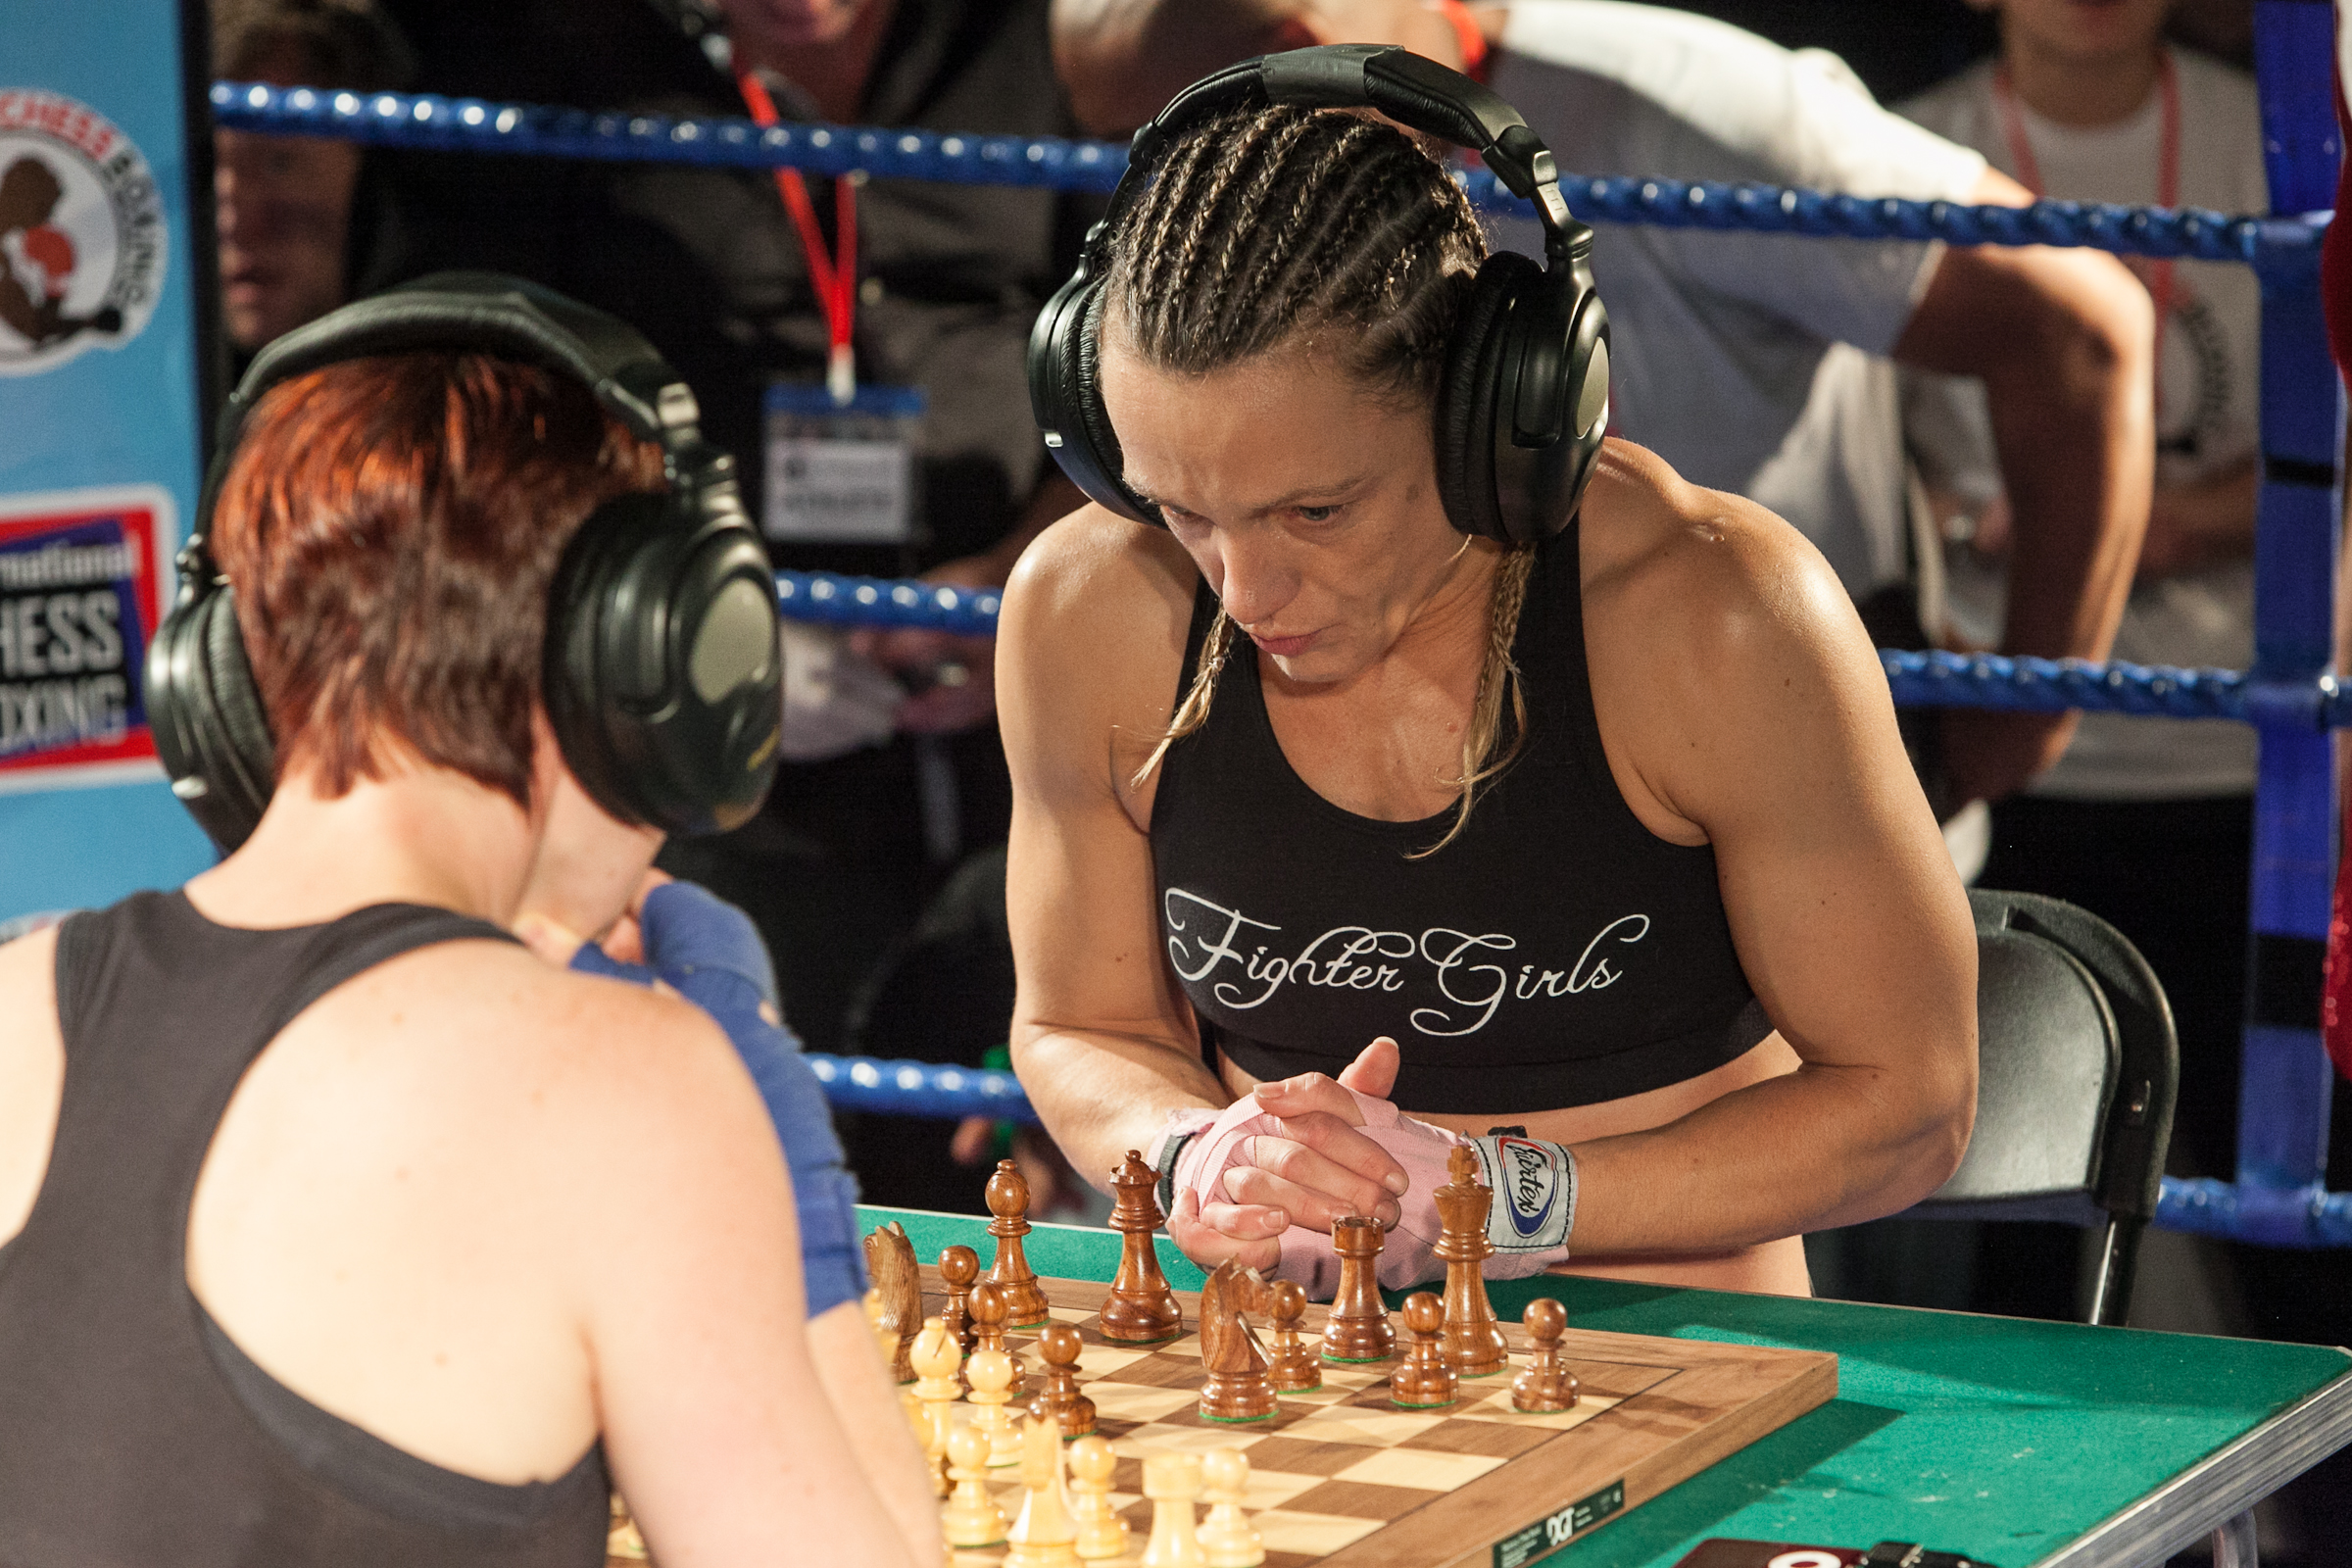 Ruthie Wright is British Chessboxing Champion.